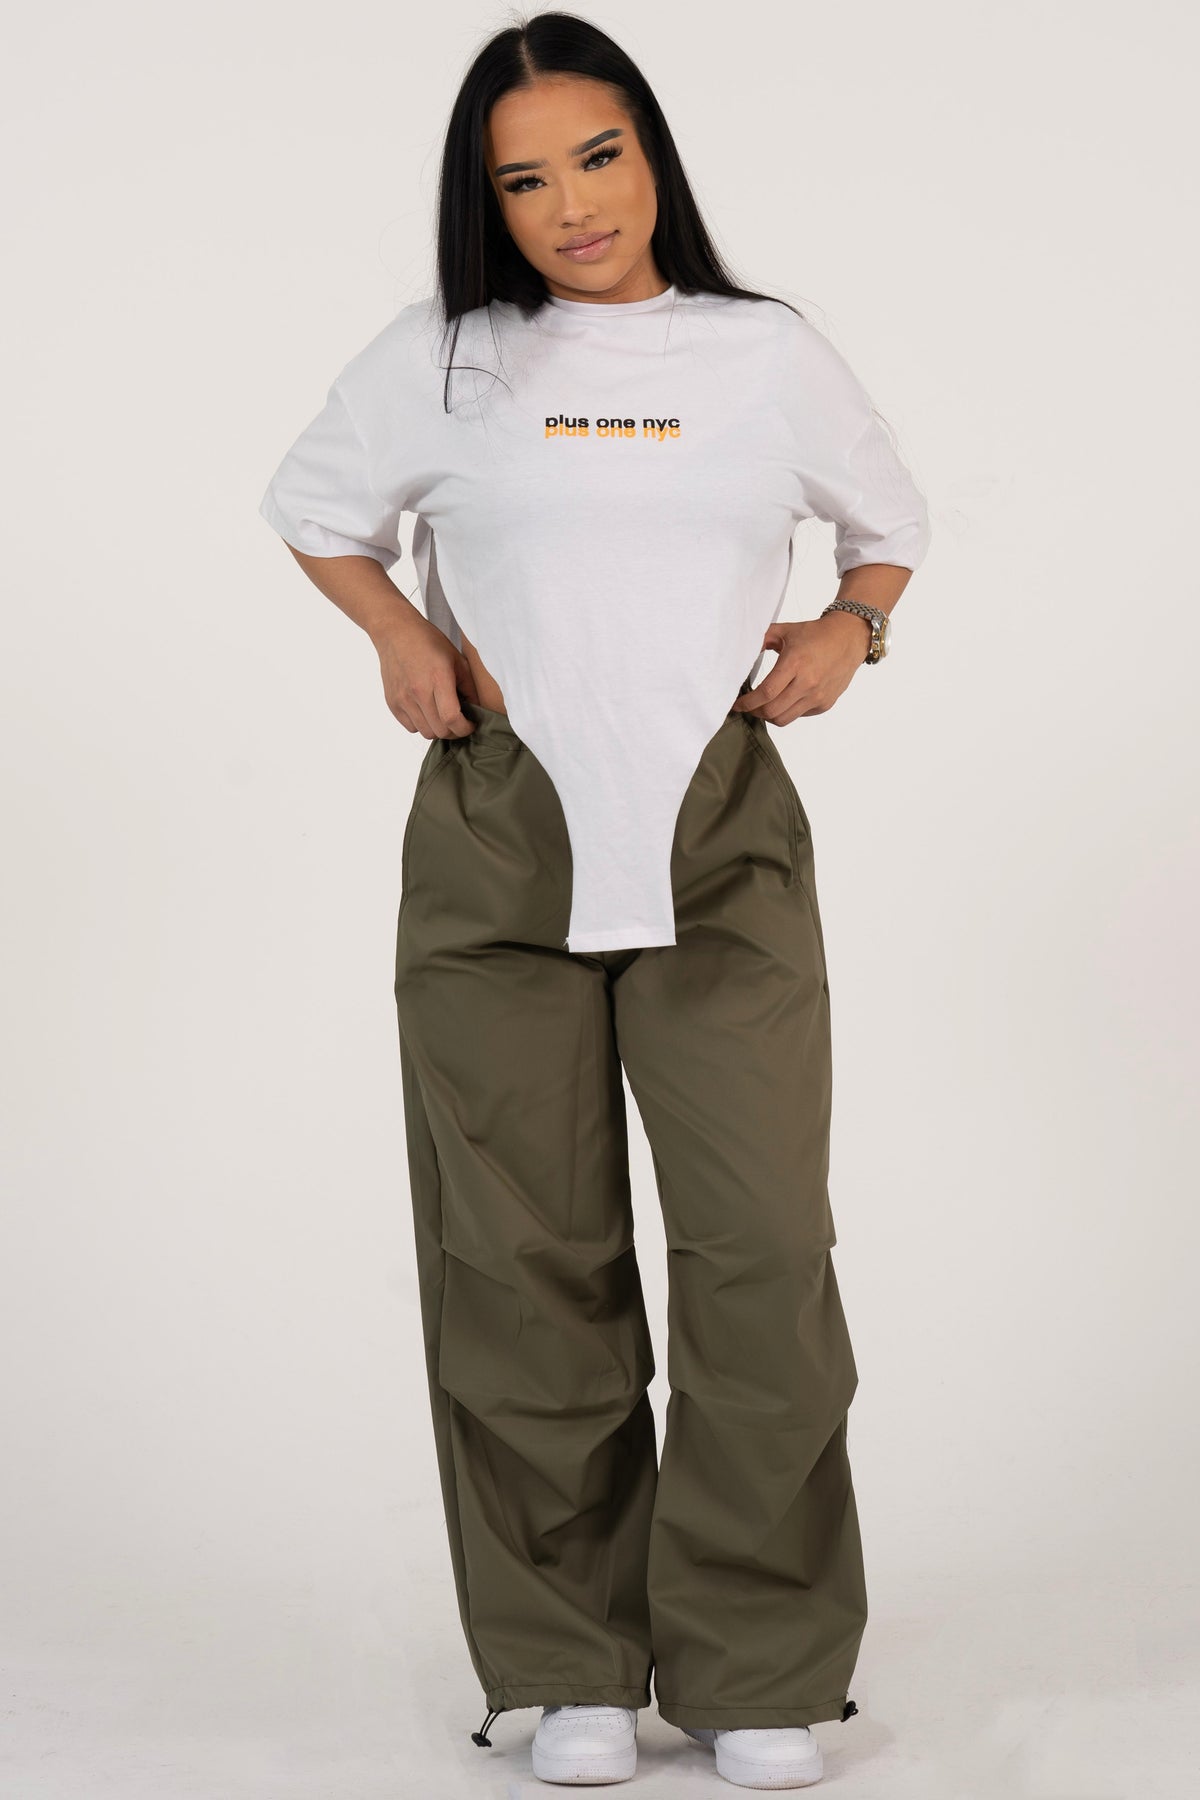 Kaki cargo pants | groene cargobroek | cargobroek | the girl wearing 